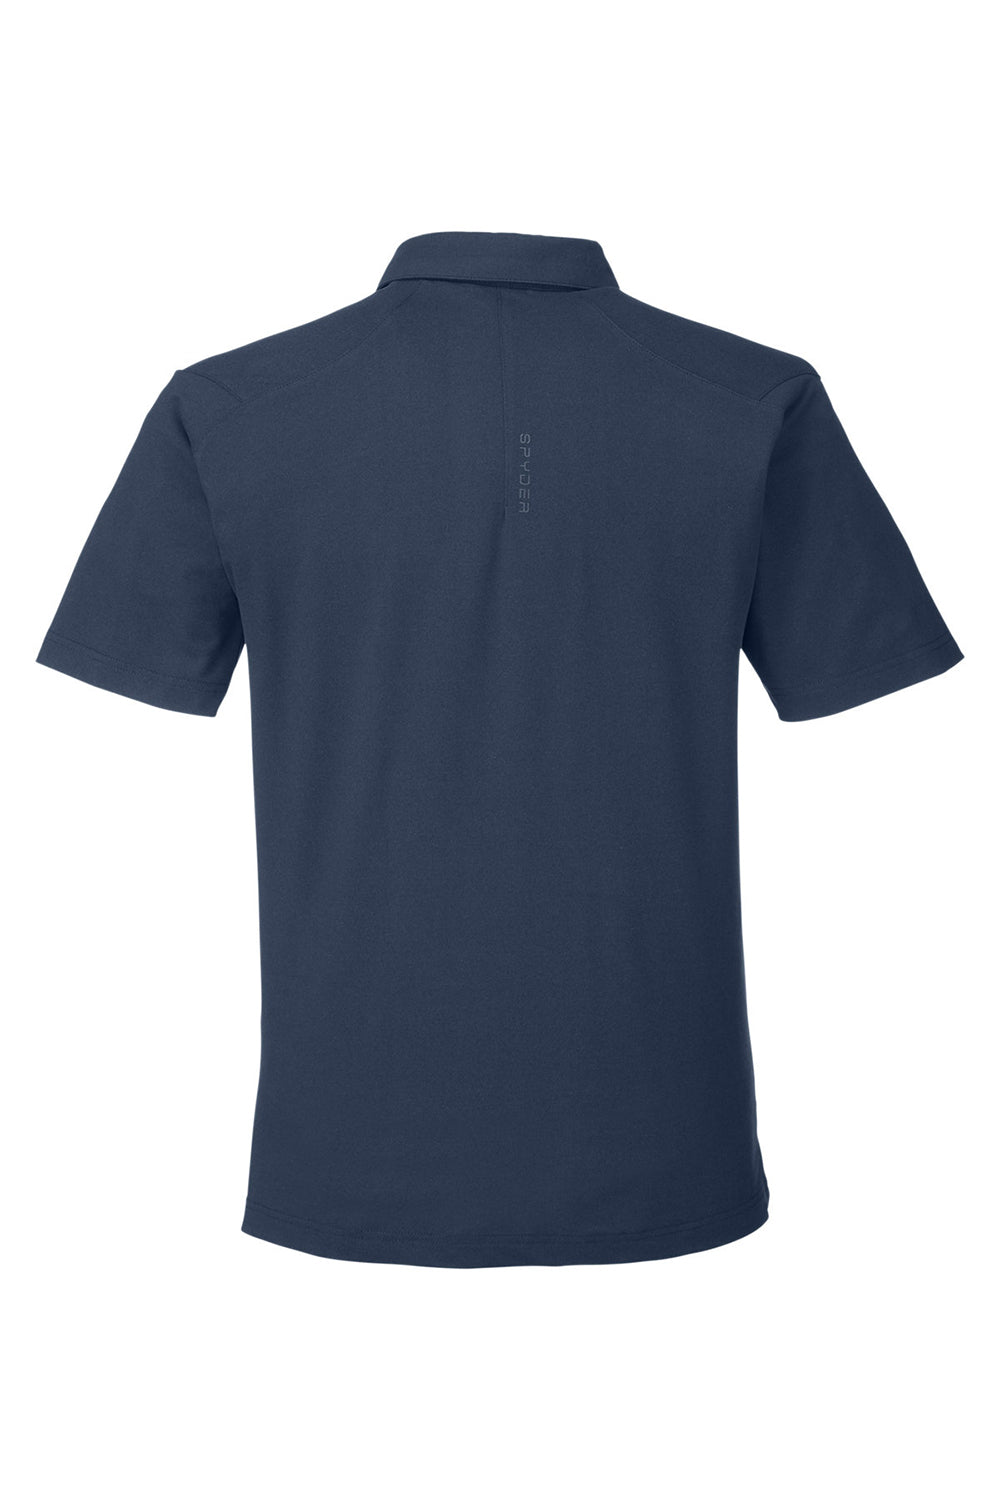 Spyder S17914 Mens Spyre Short Sleeve Polo Shirt Frontier Blue Frost Flat Back